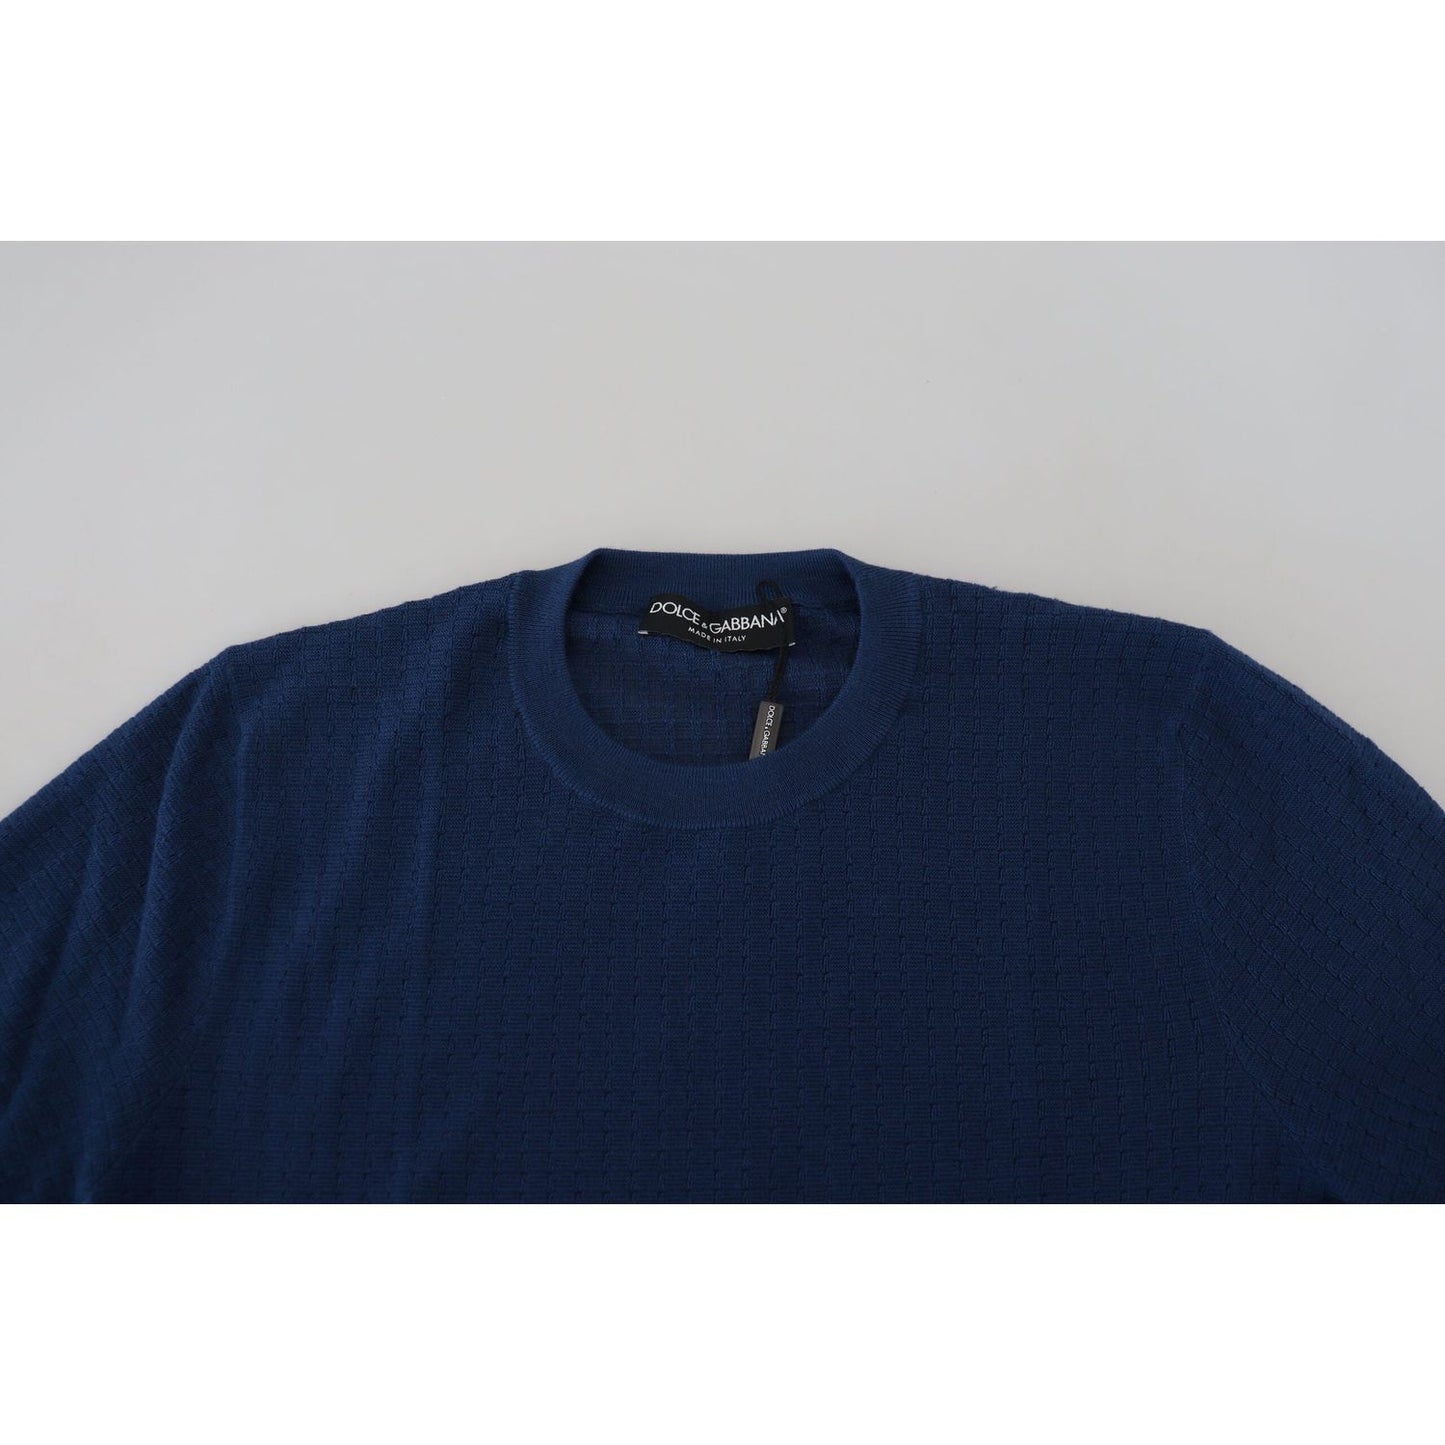 Dolce & Gabbana Elegant Blue Cashmere-Silk Men's Pullover blue-cashmere-roundneck-pullover-sweater